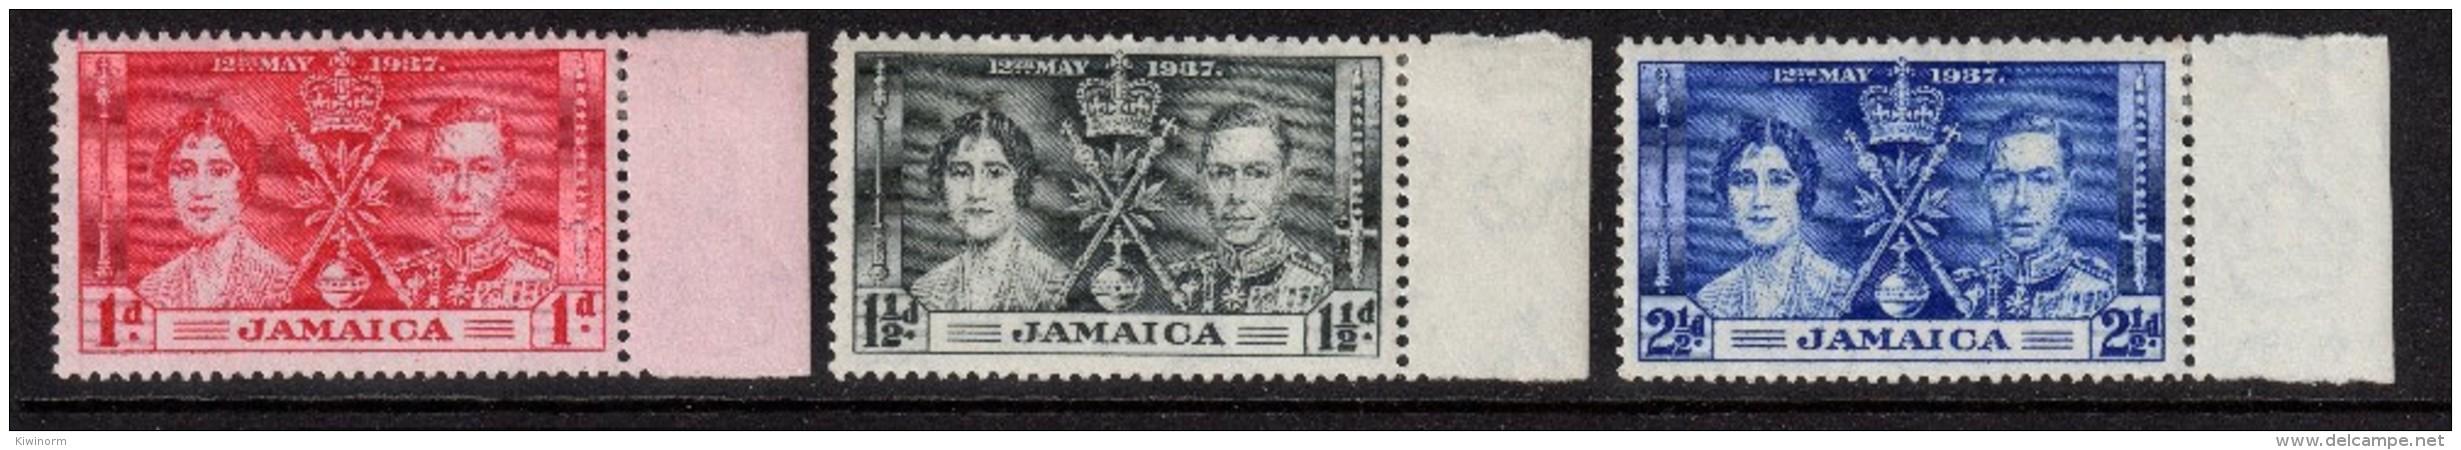 JAMAICA 1937 Coronation Omnibus Set - Mint Hinged - MH * - 5B797 - Jamaica (...-1961)